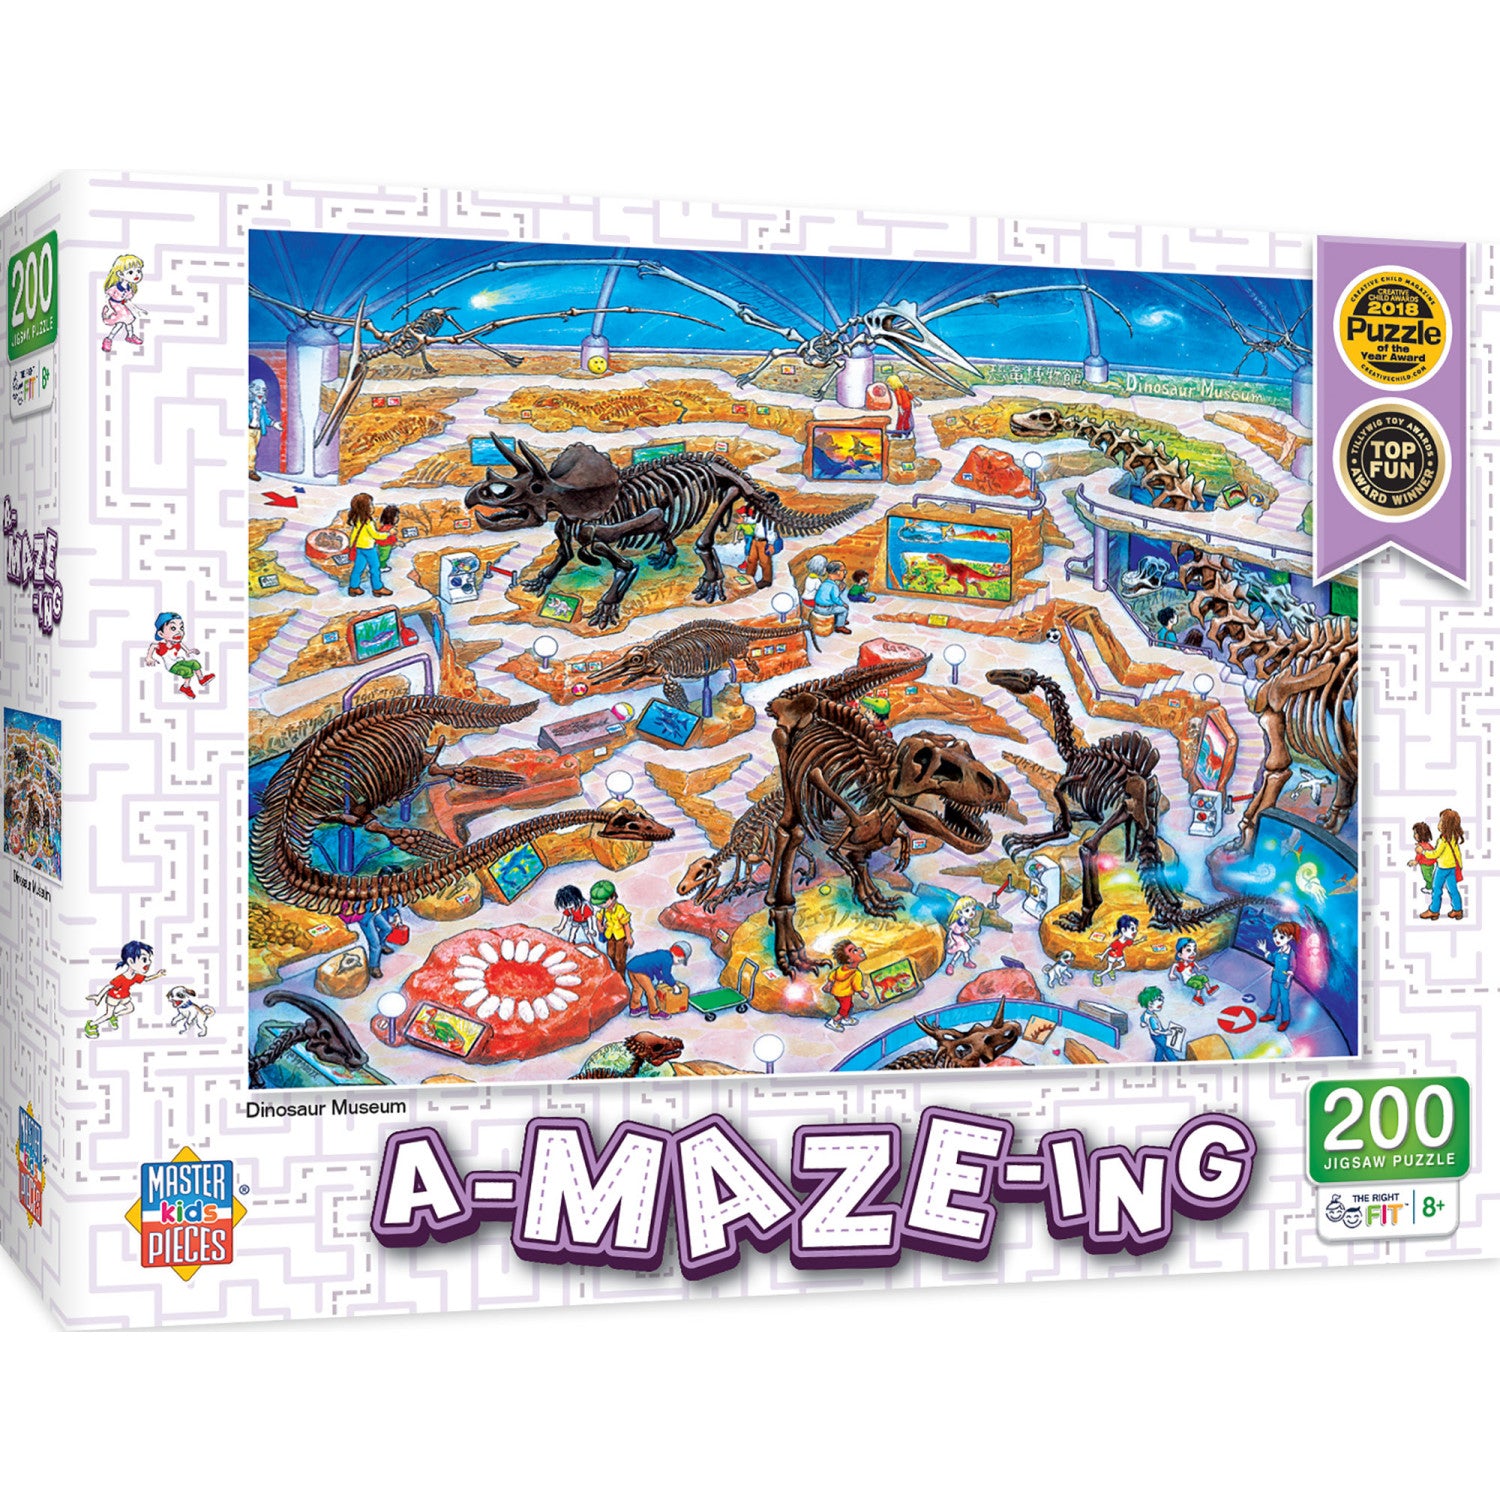 A-Maze-ing - Dinosaur Museum 200 Piece Jigsaw Puzzle